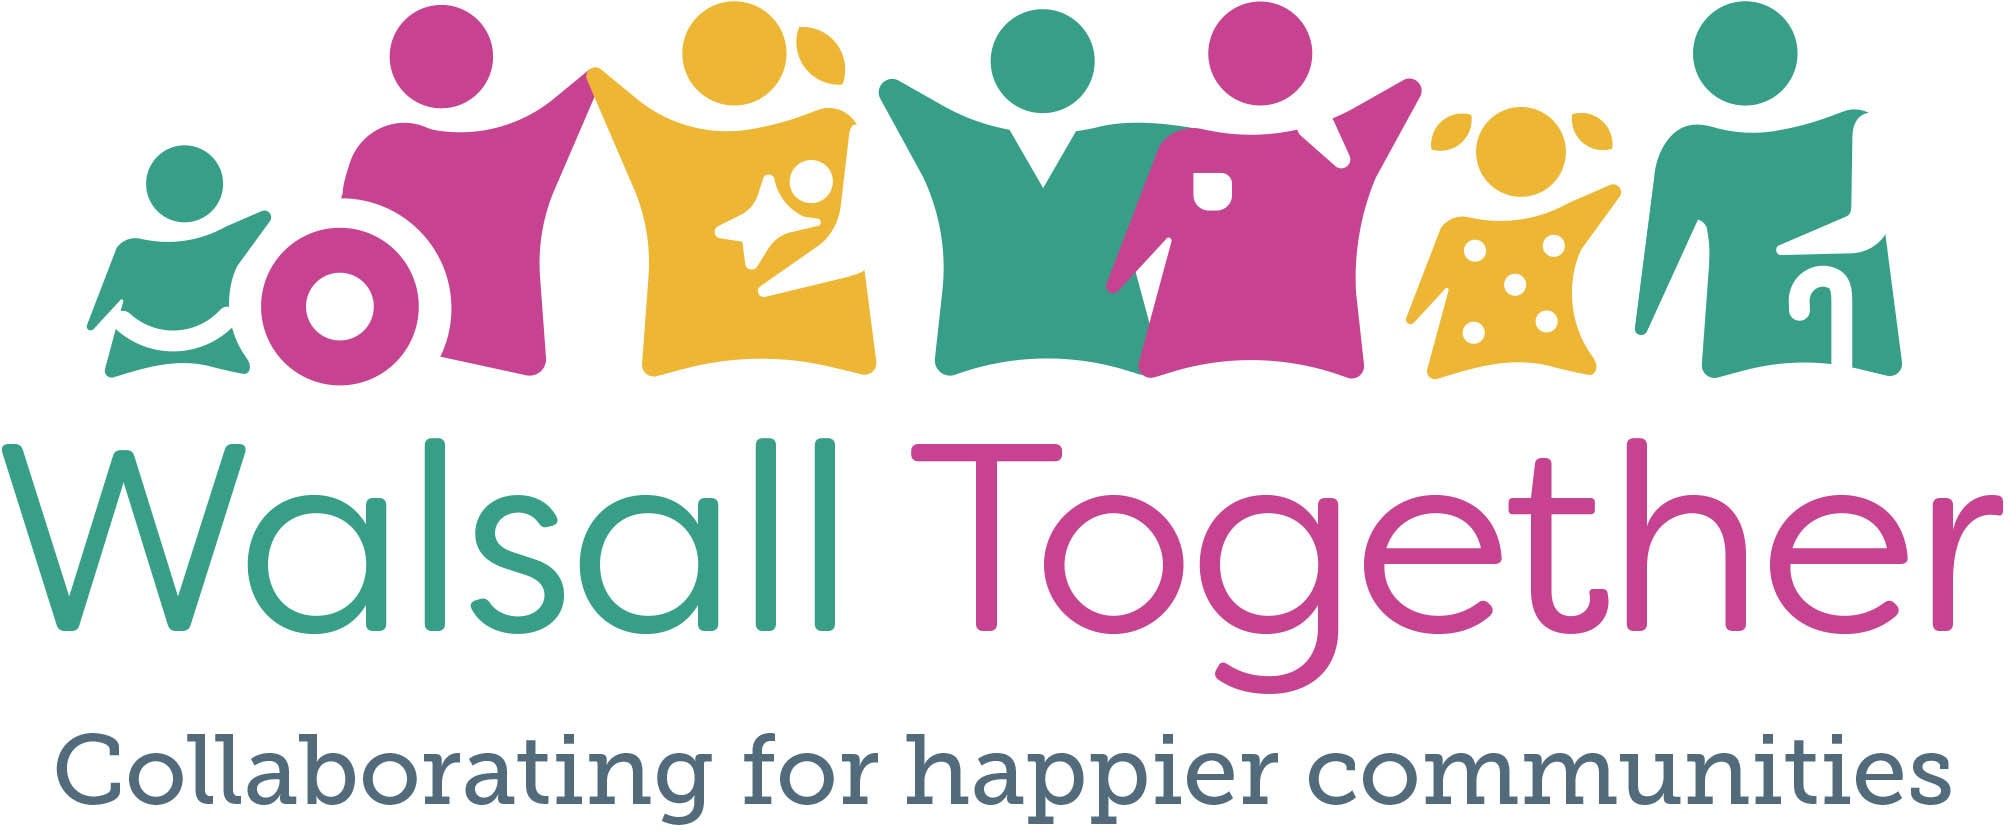 Walsall Together logo.jpg